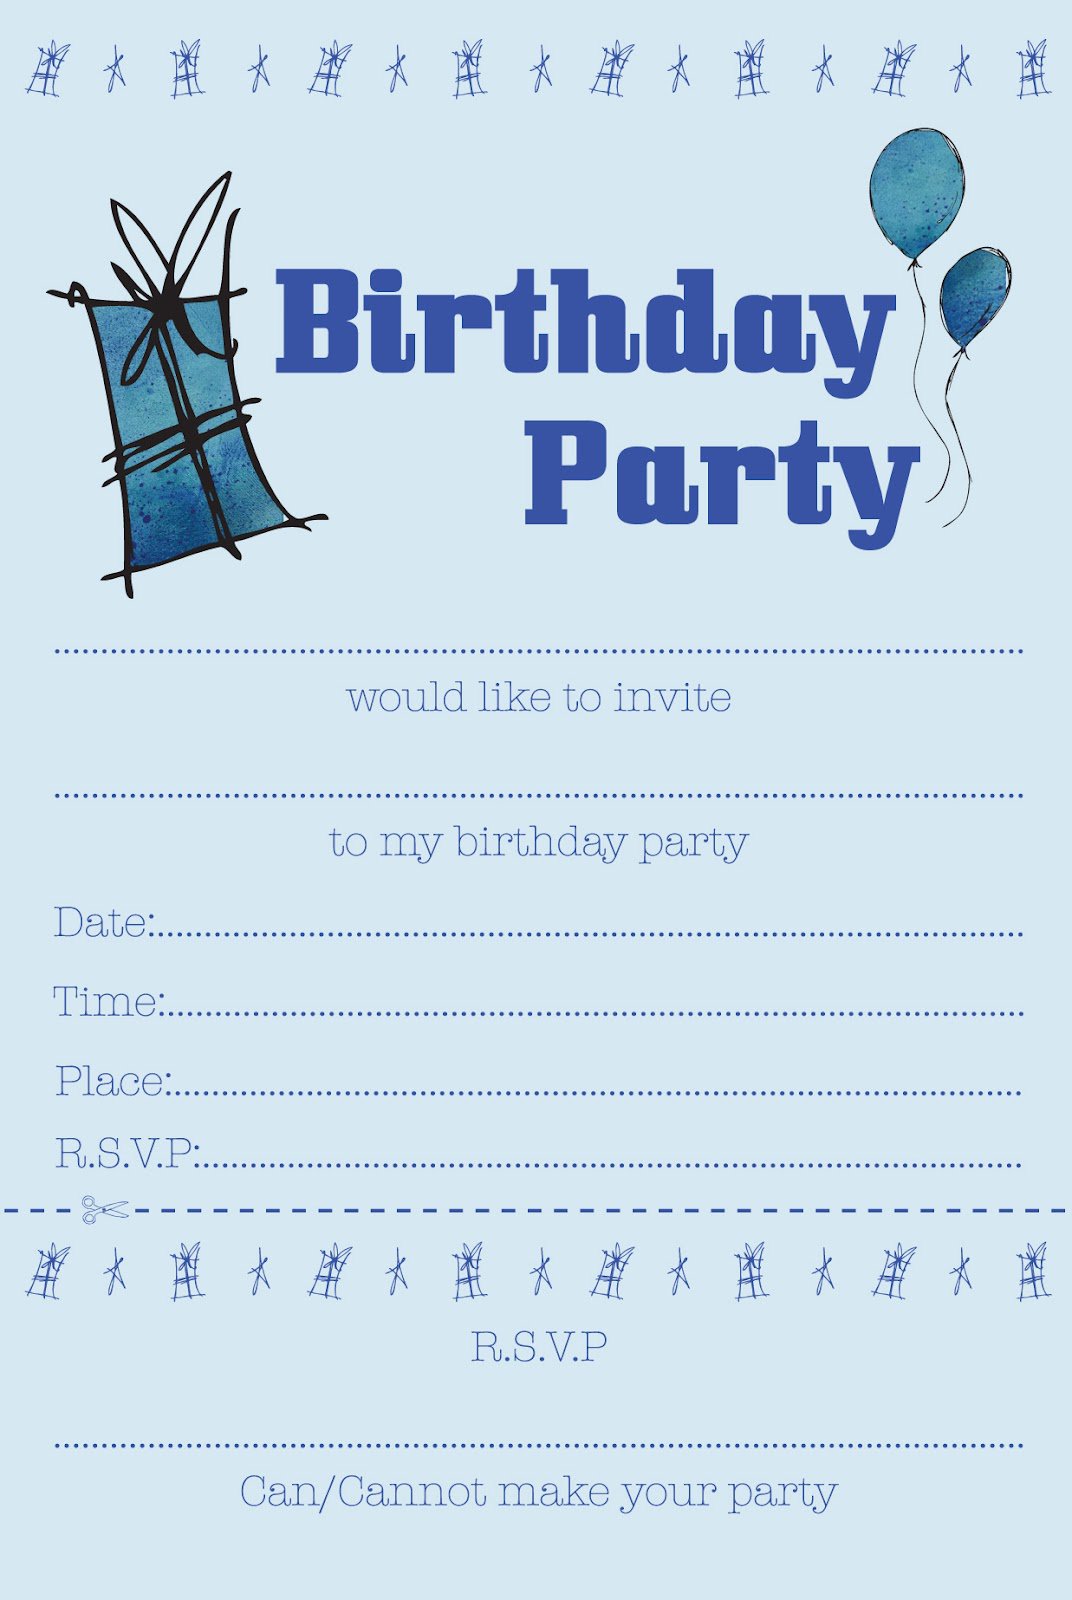 free-printable-birthday-party-invitations-kansas-magician-magic-show